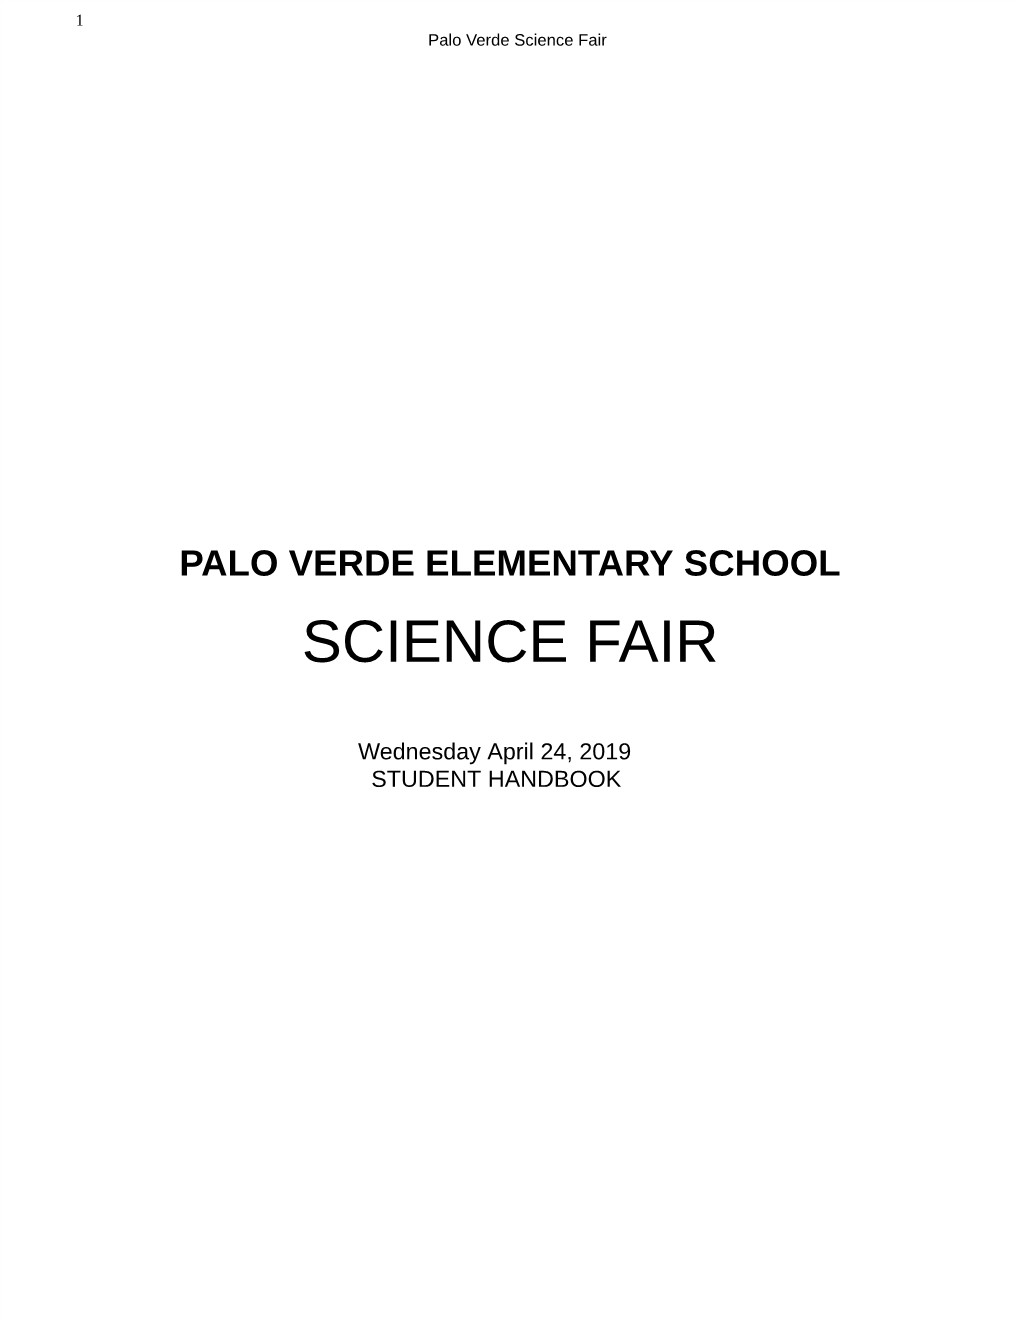 Palo Verde Science Fair 2019